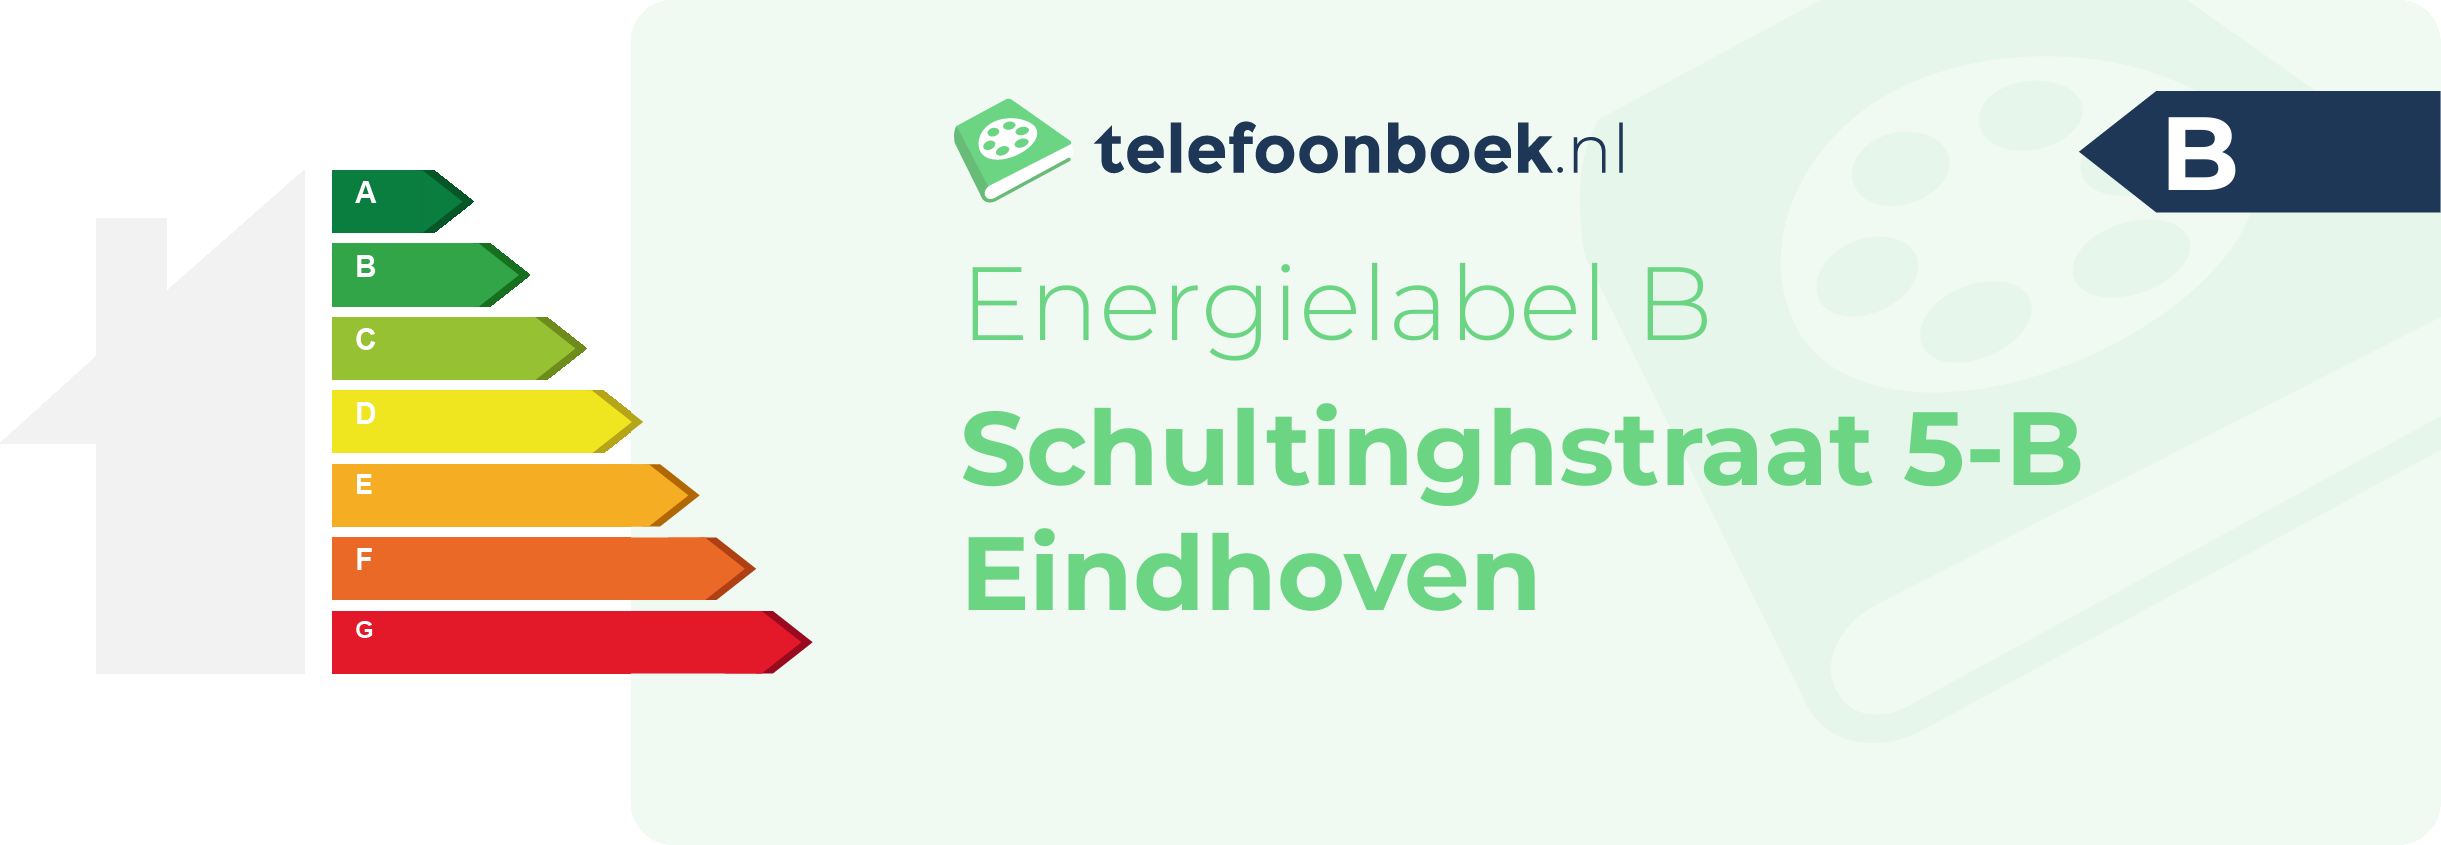 Energielabel Schultinghstraat 5-B Eindhoven